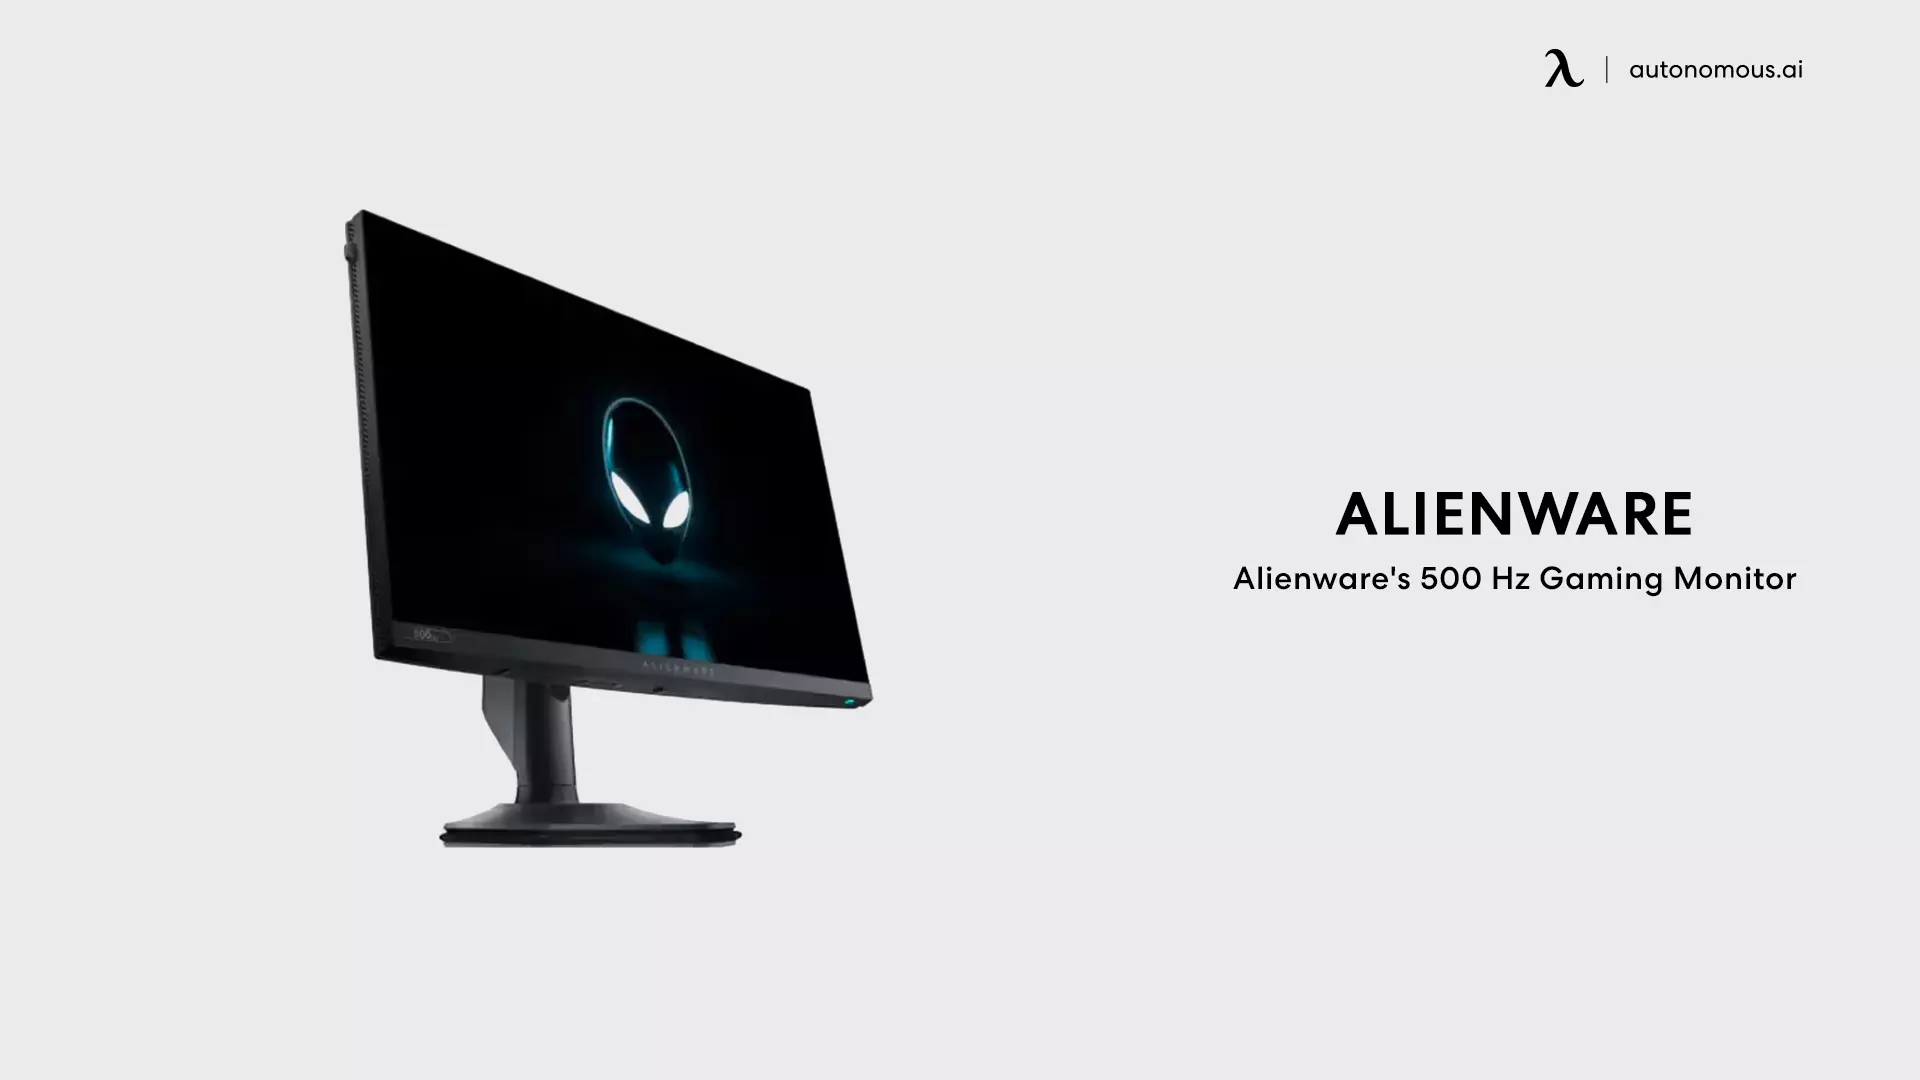 Alienware's 500 Hz Gaming Monitor